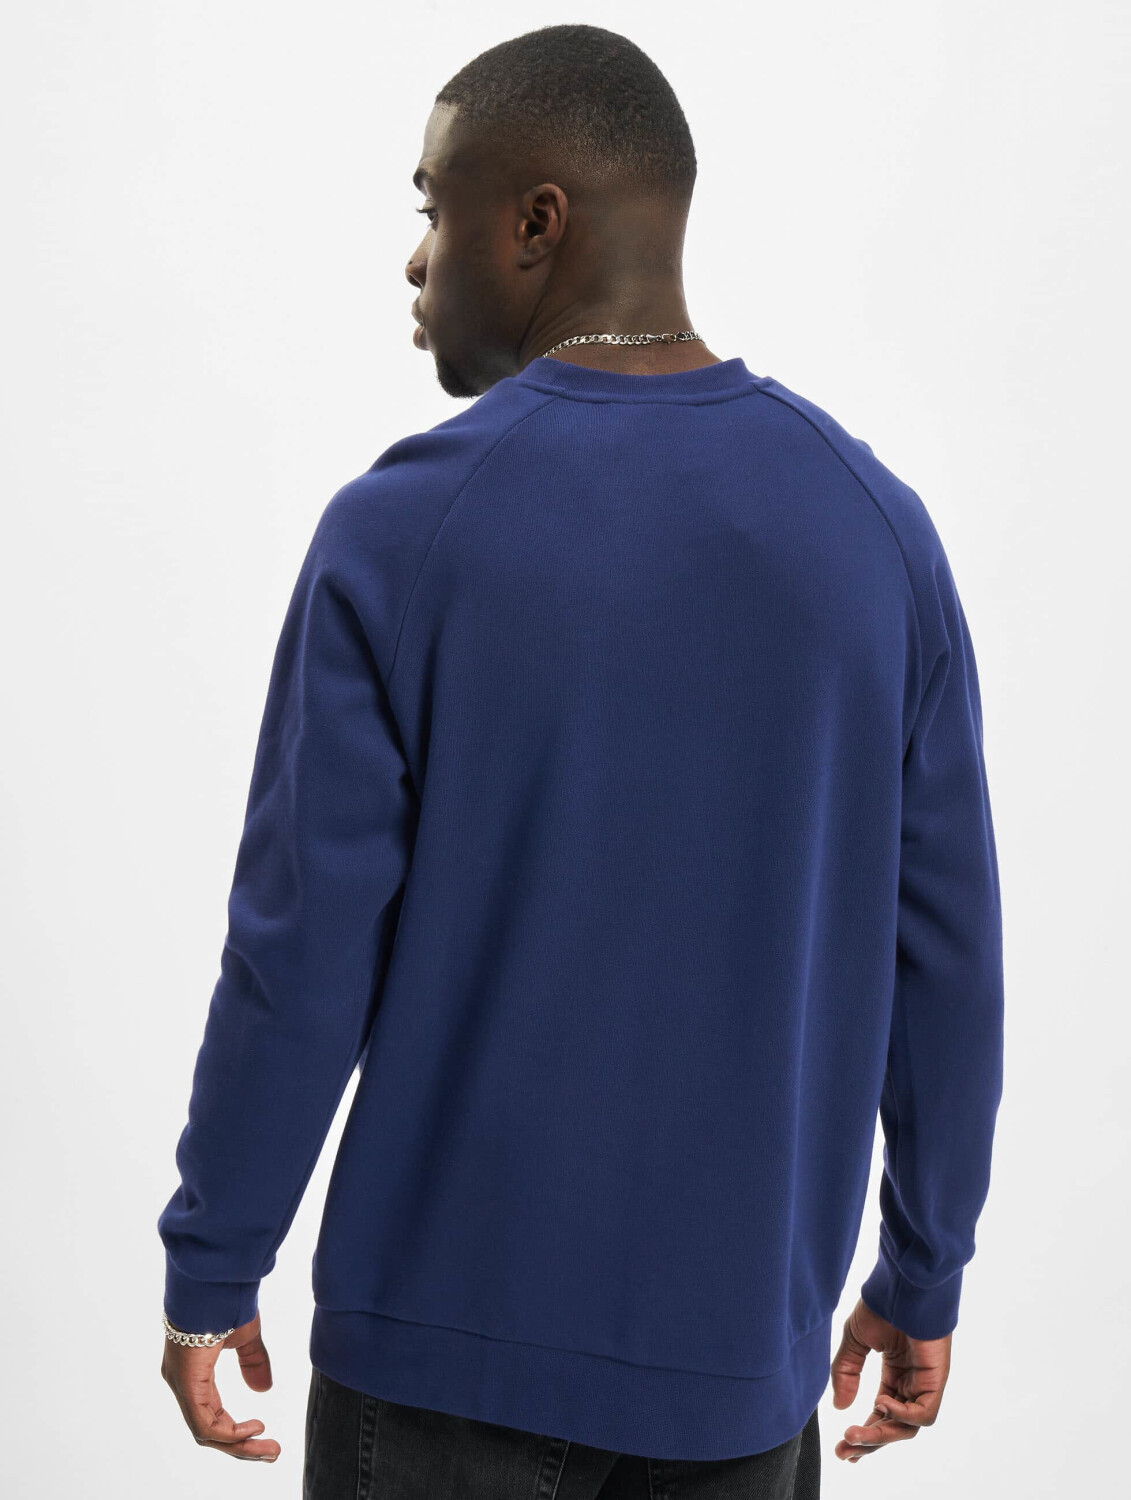 Buy Adidas adicolor Classics Trefoil dark Best on from Deals – (Today) (H06654) £22.99 Sweatshirt blue